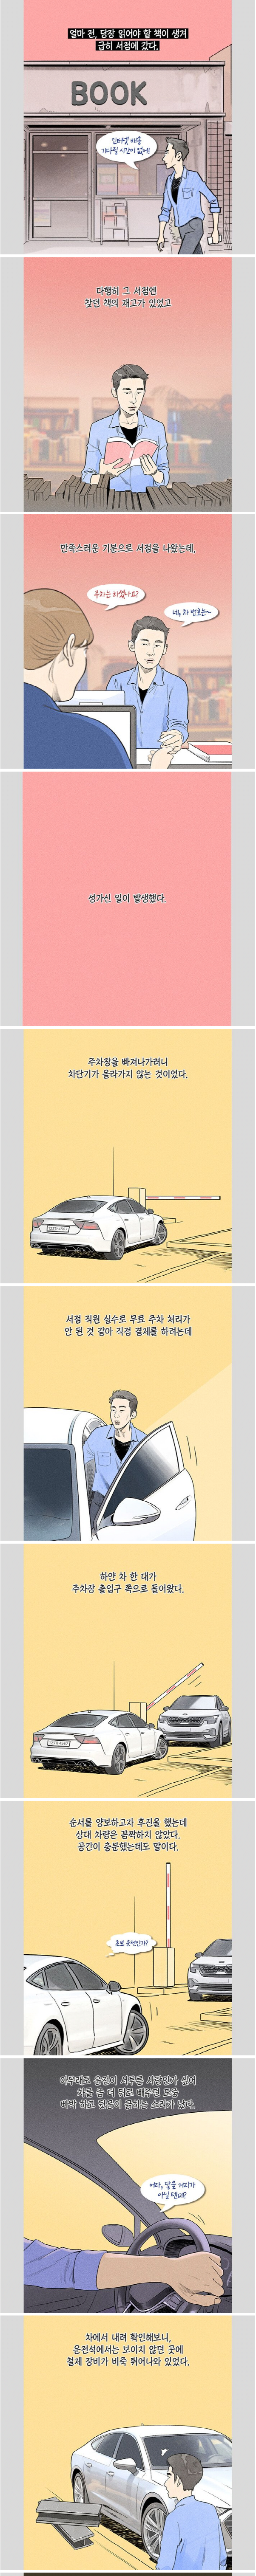 nokbeon.net-허지웅이 겪은 일화로 보는 불행의 인과관계-1번 이미지